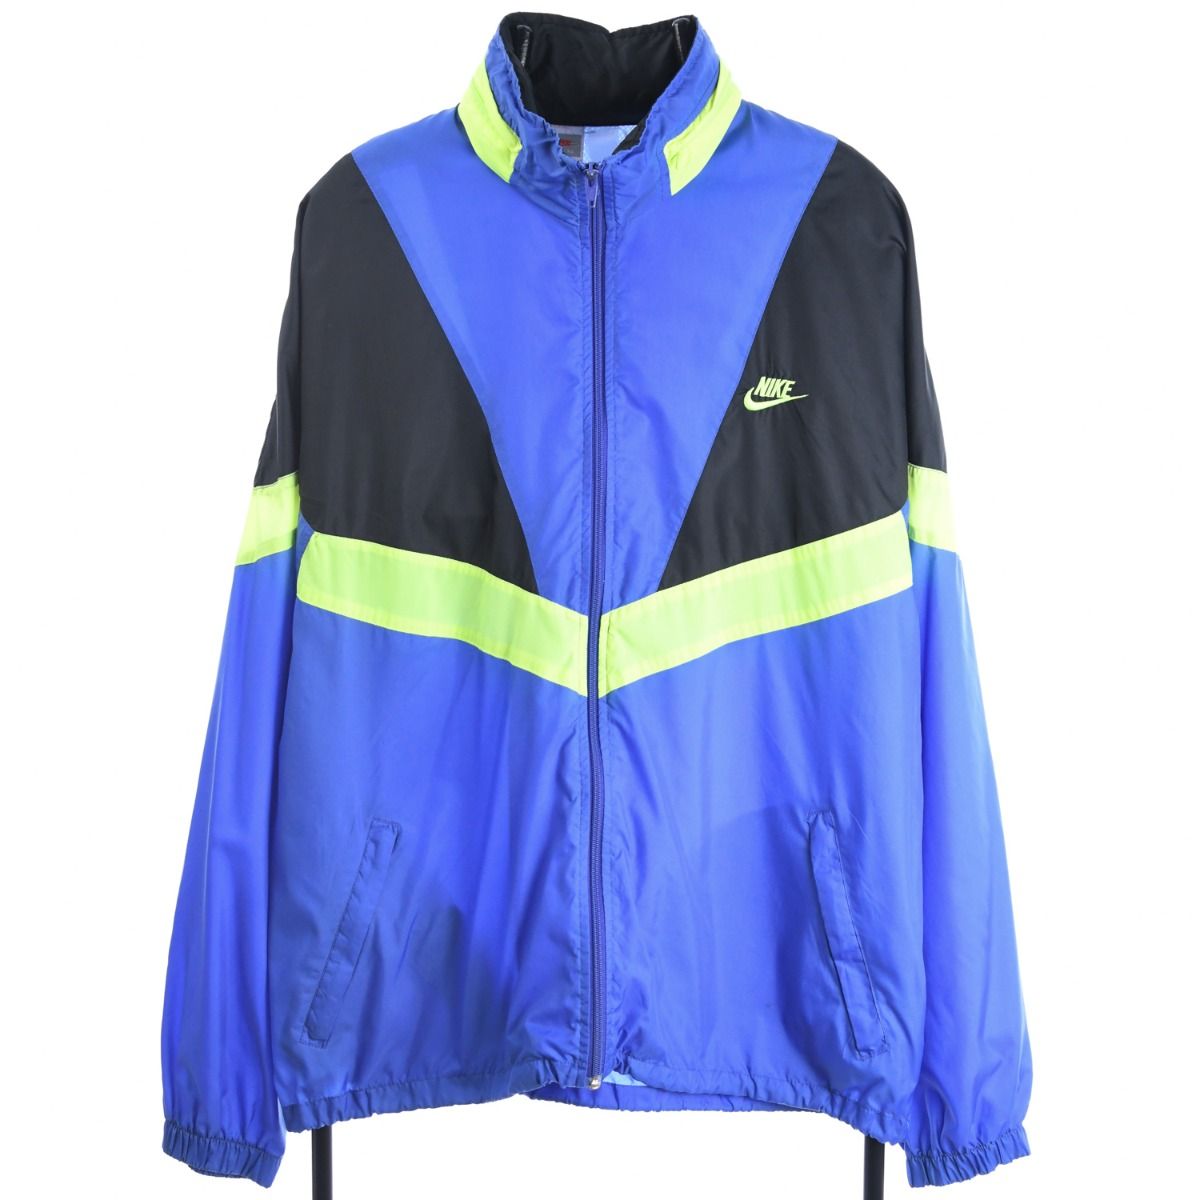 Nike Early 1990s Blue Shell Jacket